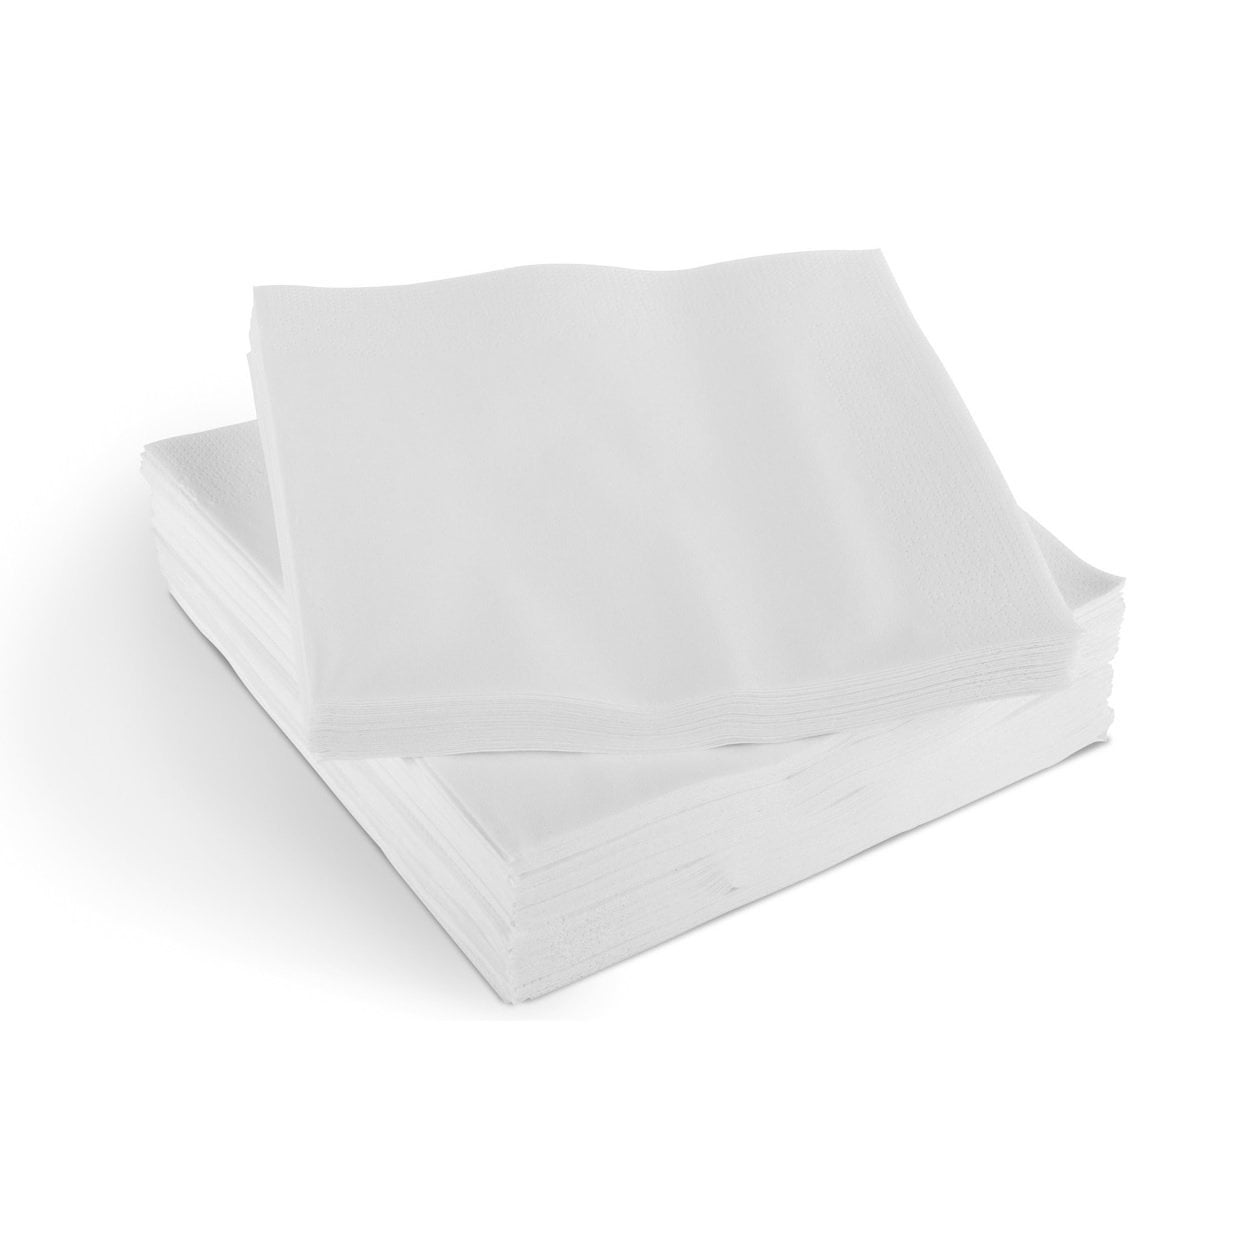 1000 x Yellow Paper Napkins 2 Ply 33cm 4 Fold Tissue Serviettes